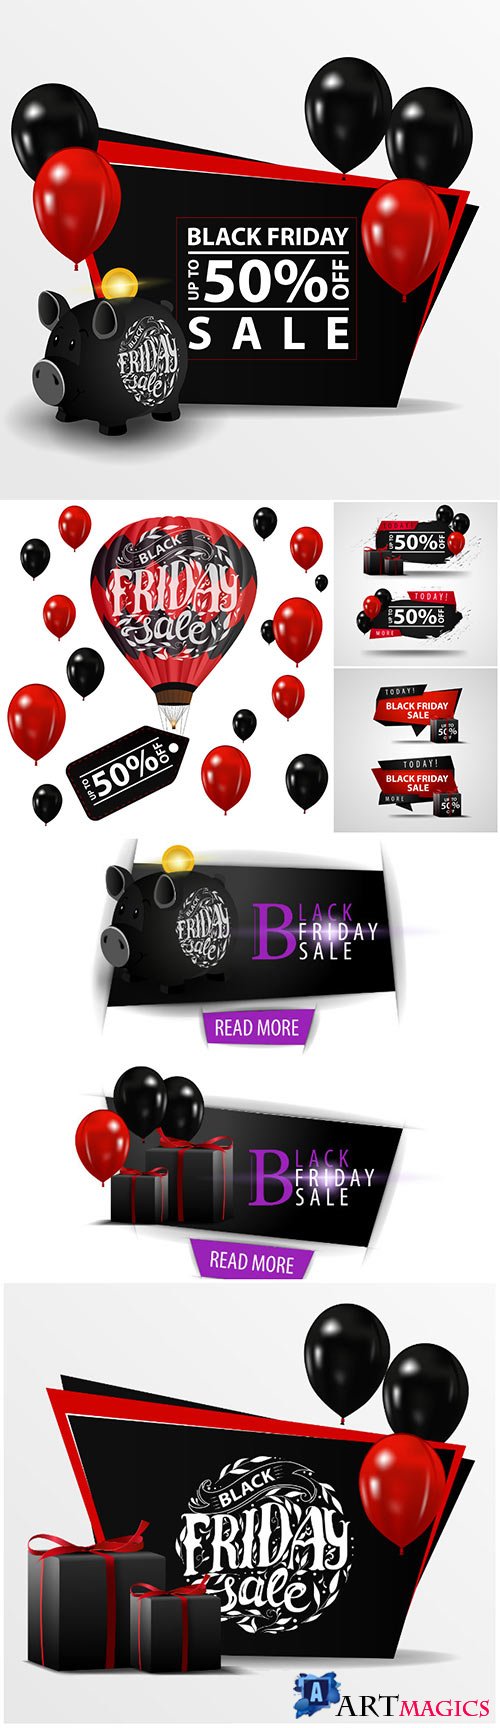 Black Friday sale vector banner with black piggy bank